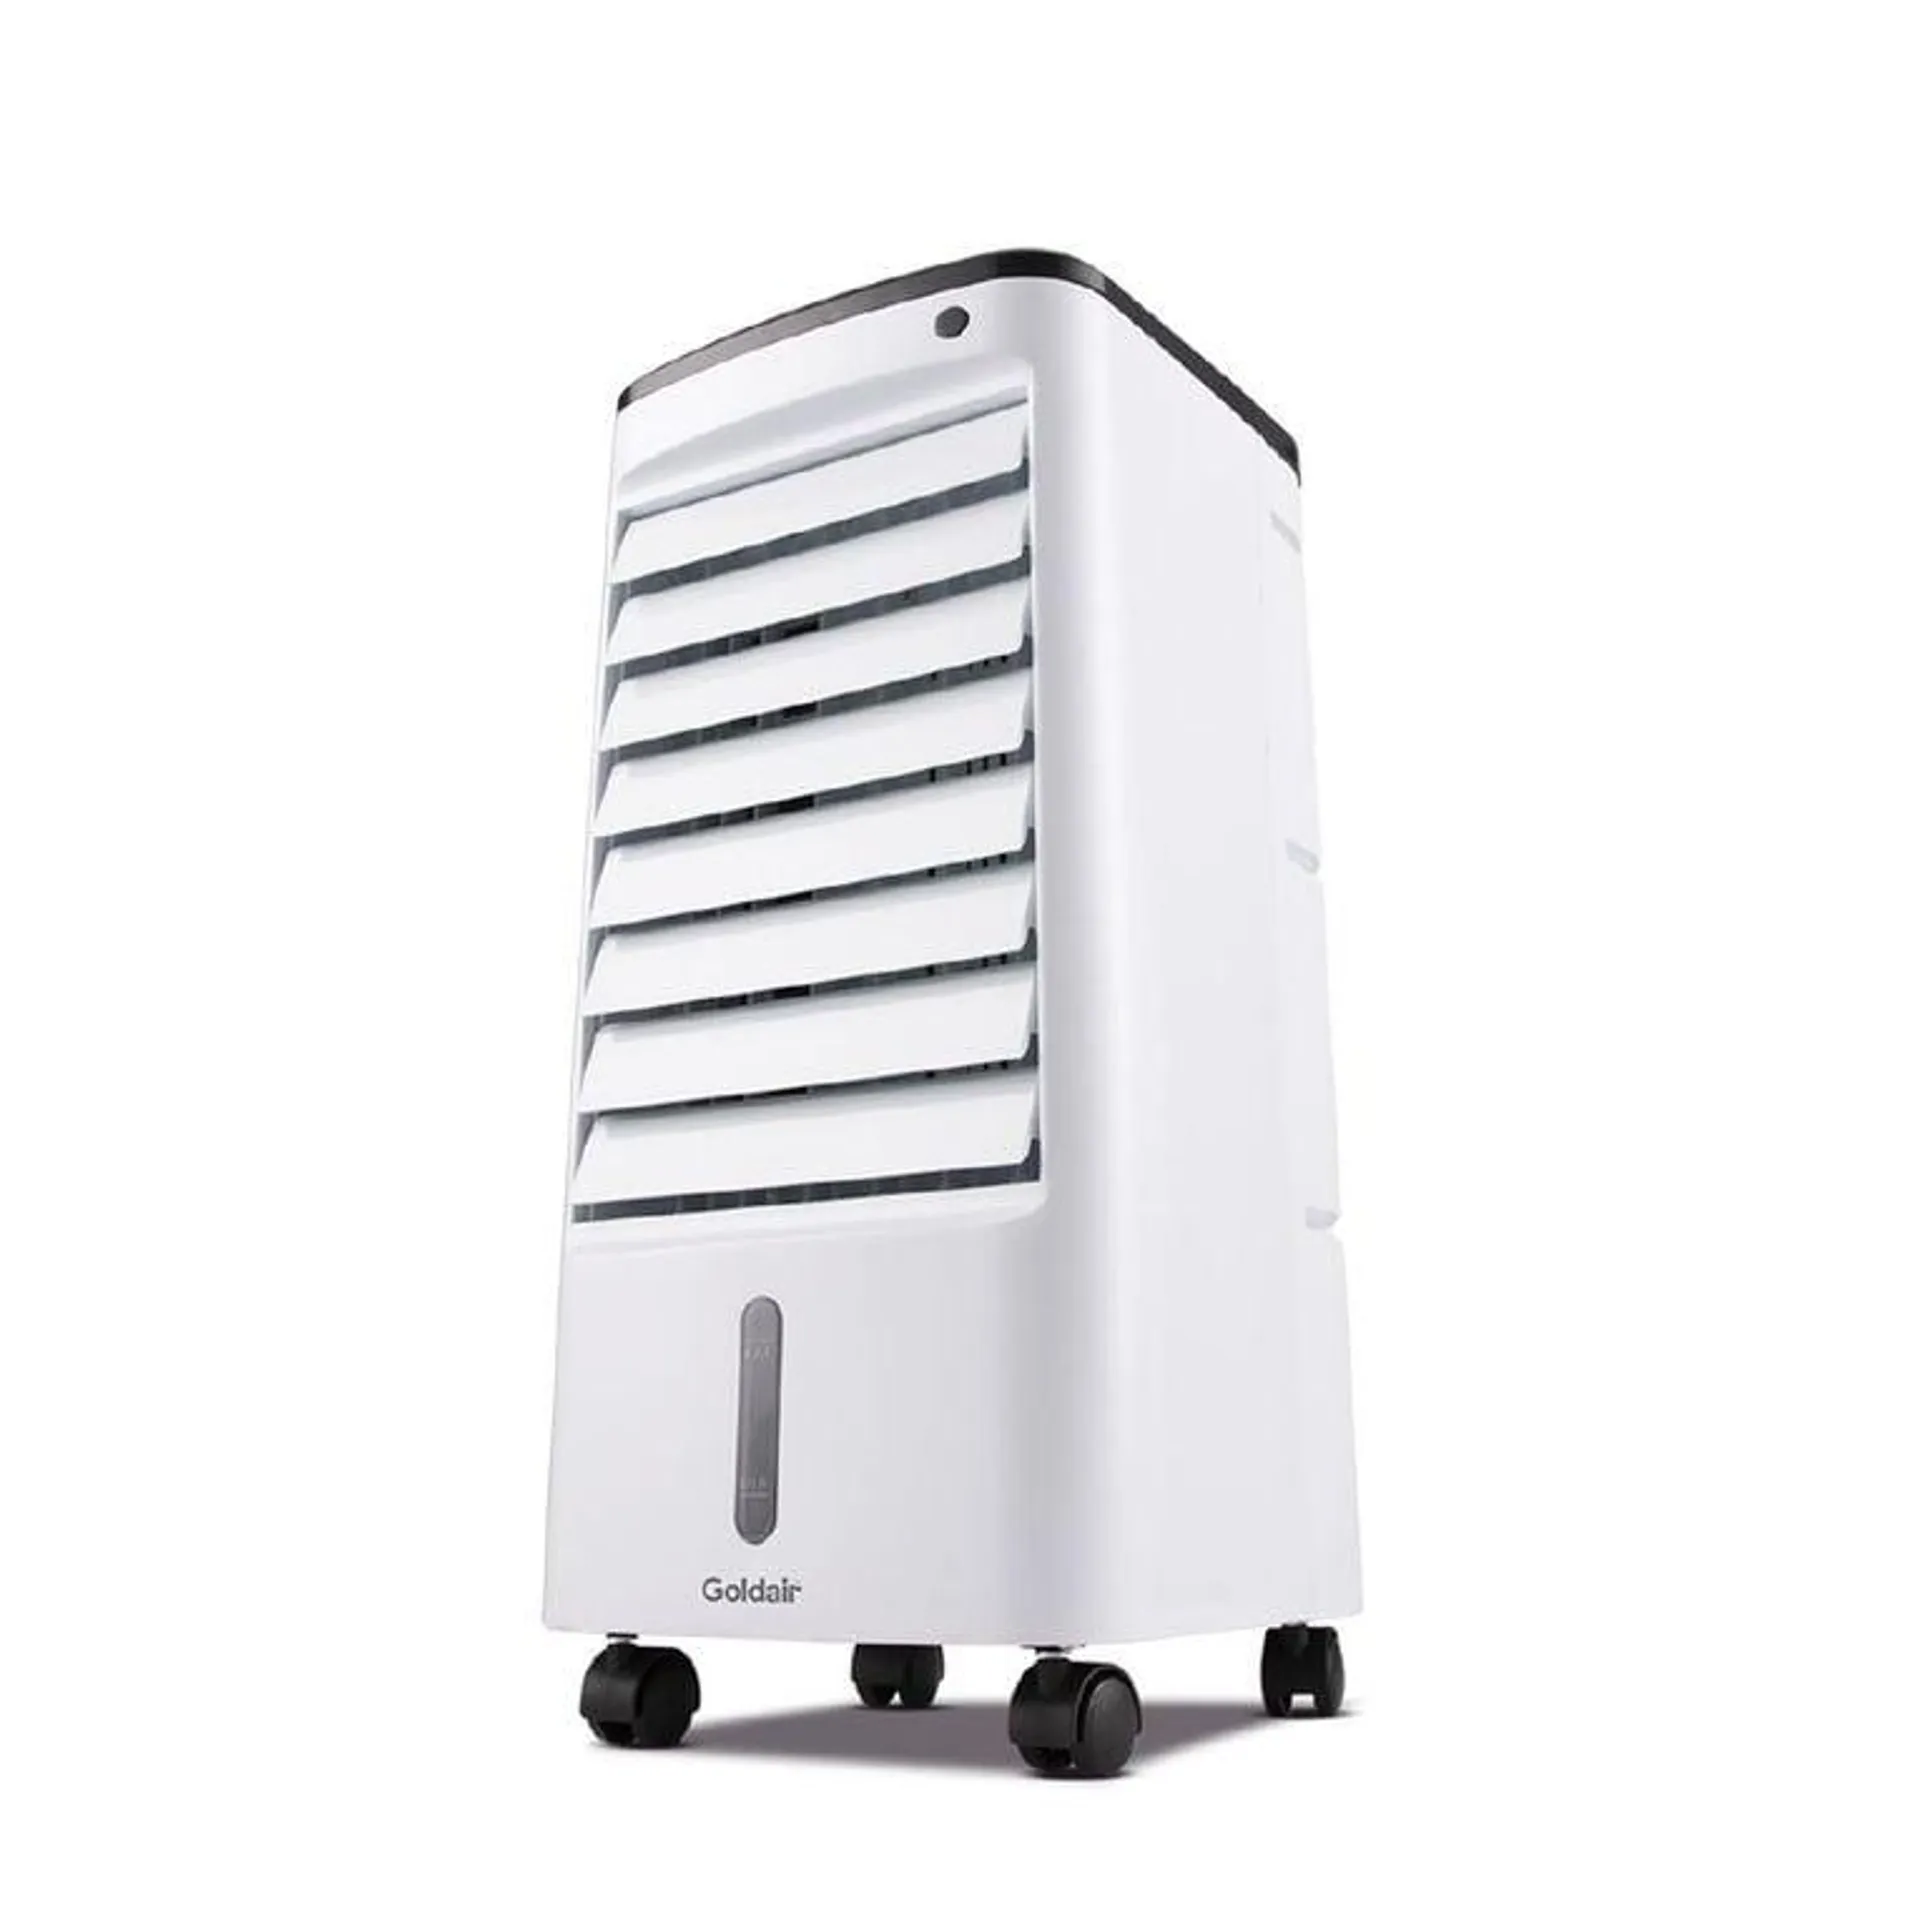 Goldair 4L Evaporative Cooler